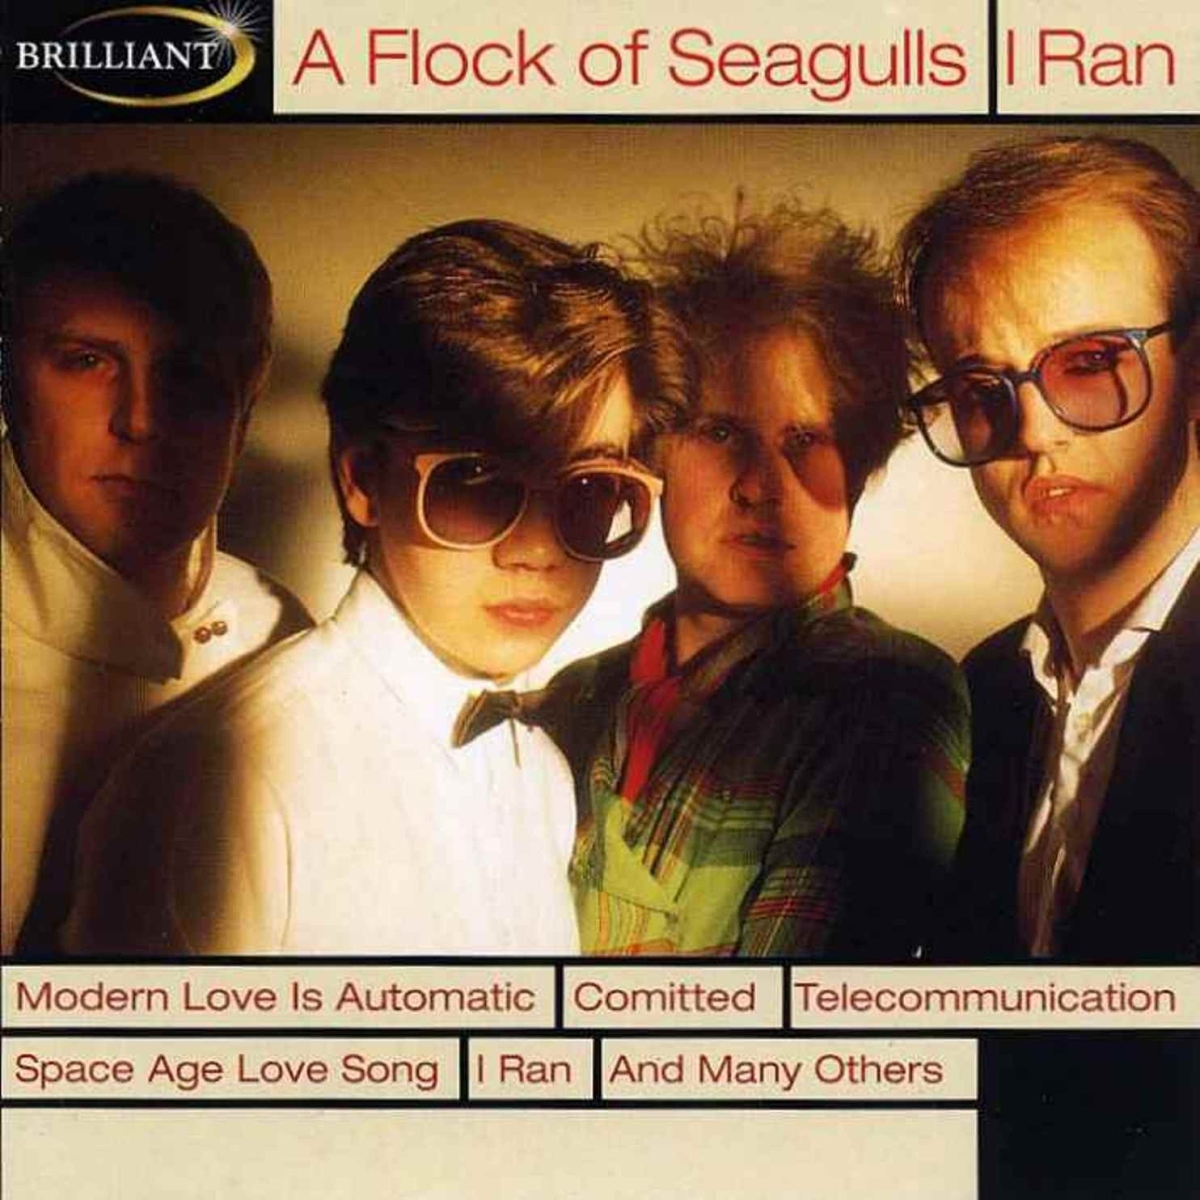 A flock of Seagulls 1982. Группа a flock of Seagulls. A flock of Seagulls i Ran. A flock of Seagulls - i Ran (so far away).